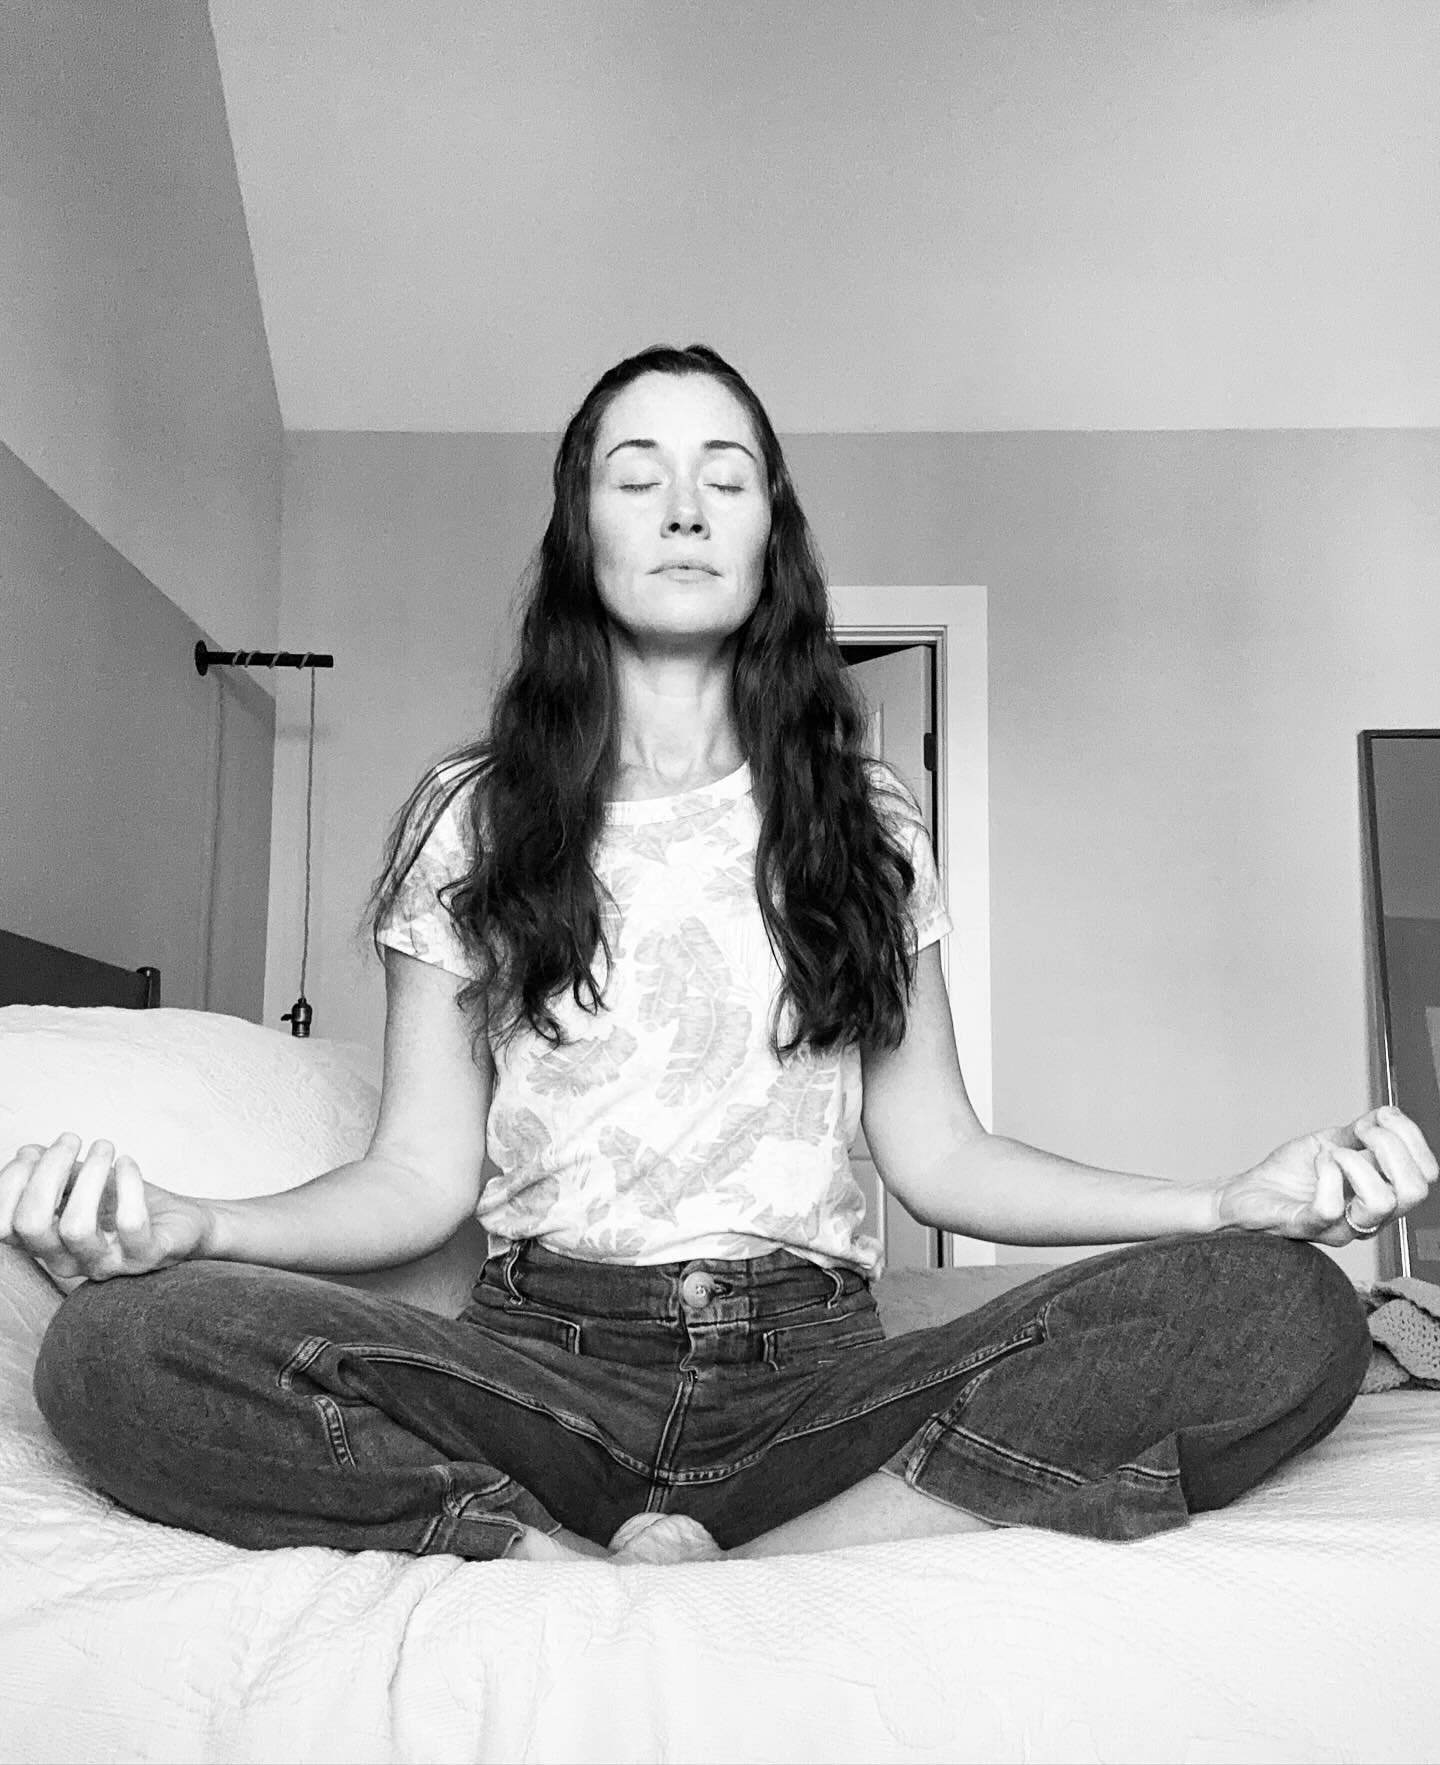 Taking time to sit quietly. To soften the body. To listen.

#meditation #meditationteacher #mindfulnessmeditation #mindfulness #yogateacher #timelesspractice #yinspiration #yinyoga #yoganashville #mumlife #momlife #9monthspostpartum #postpartumjourne